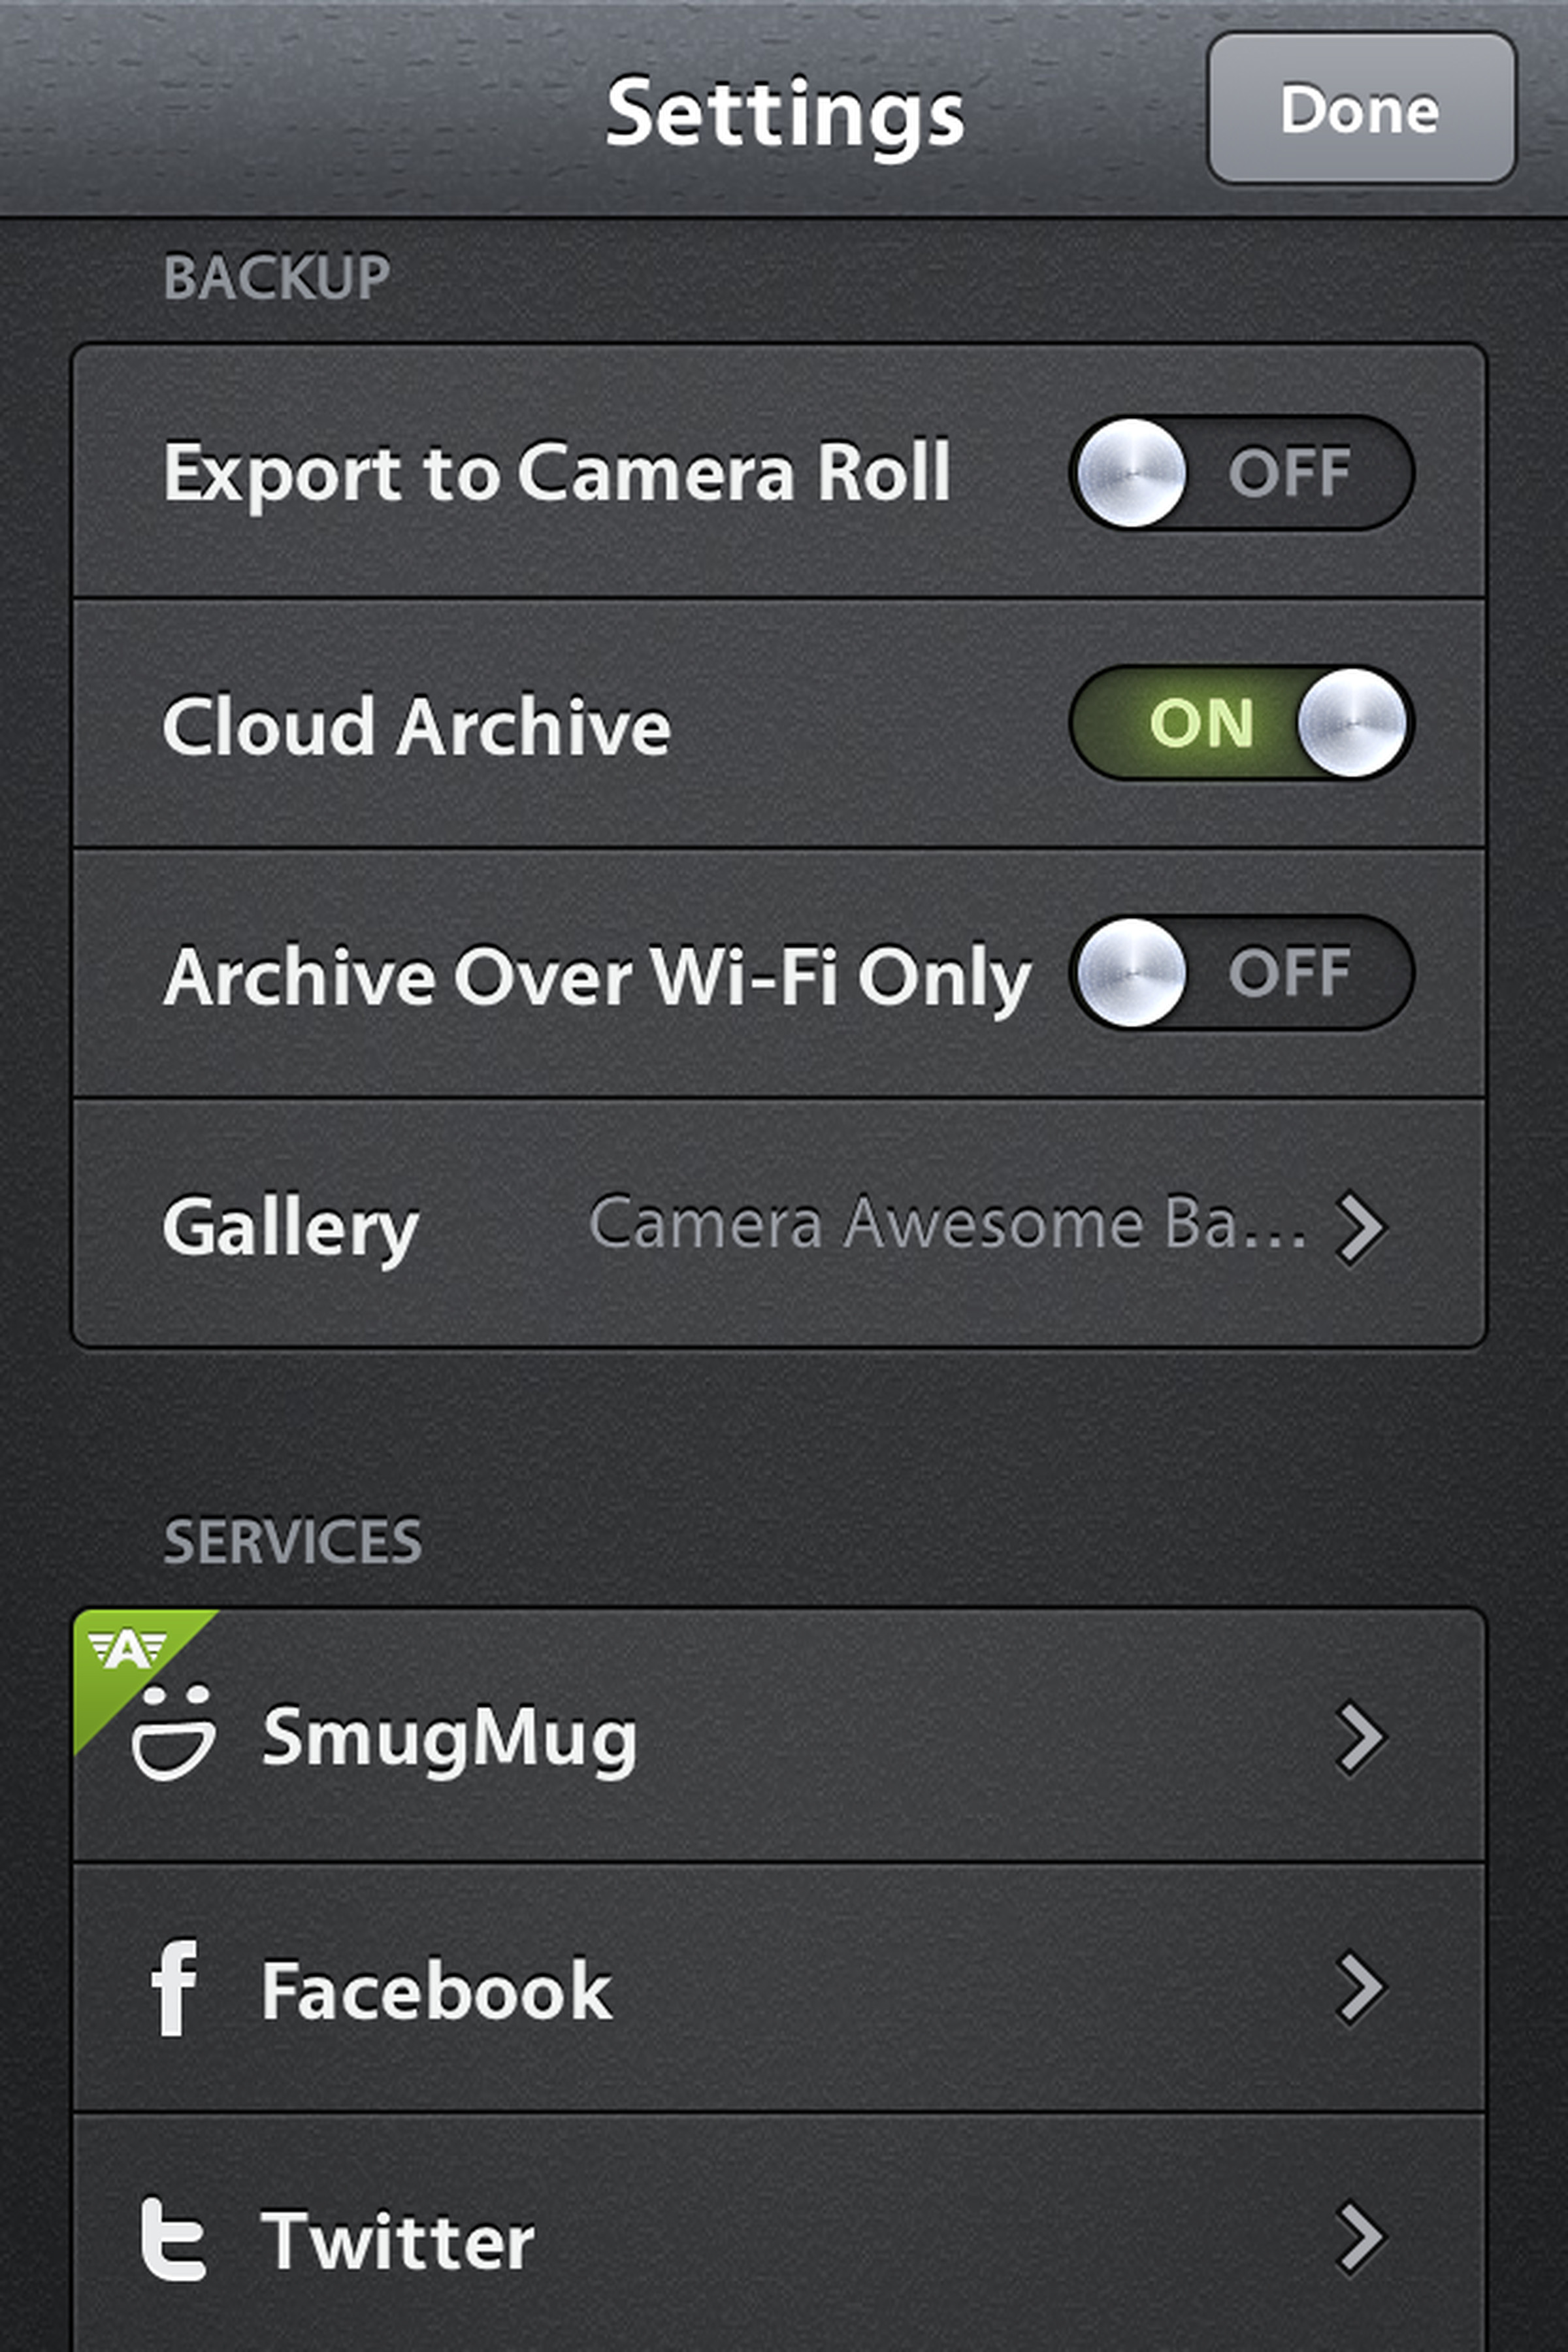 SmugMug Camera Awesome for iPhone hands-on screenshots